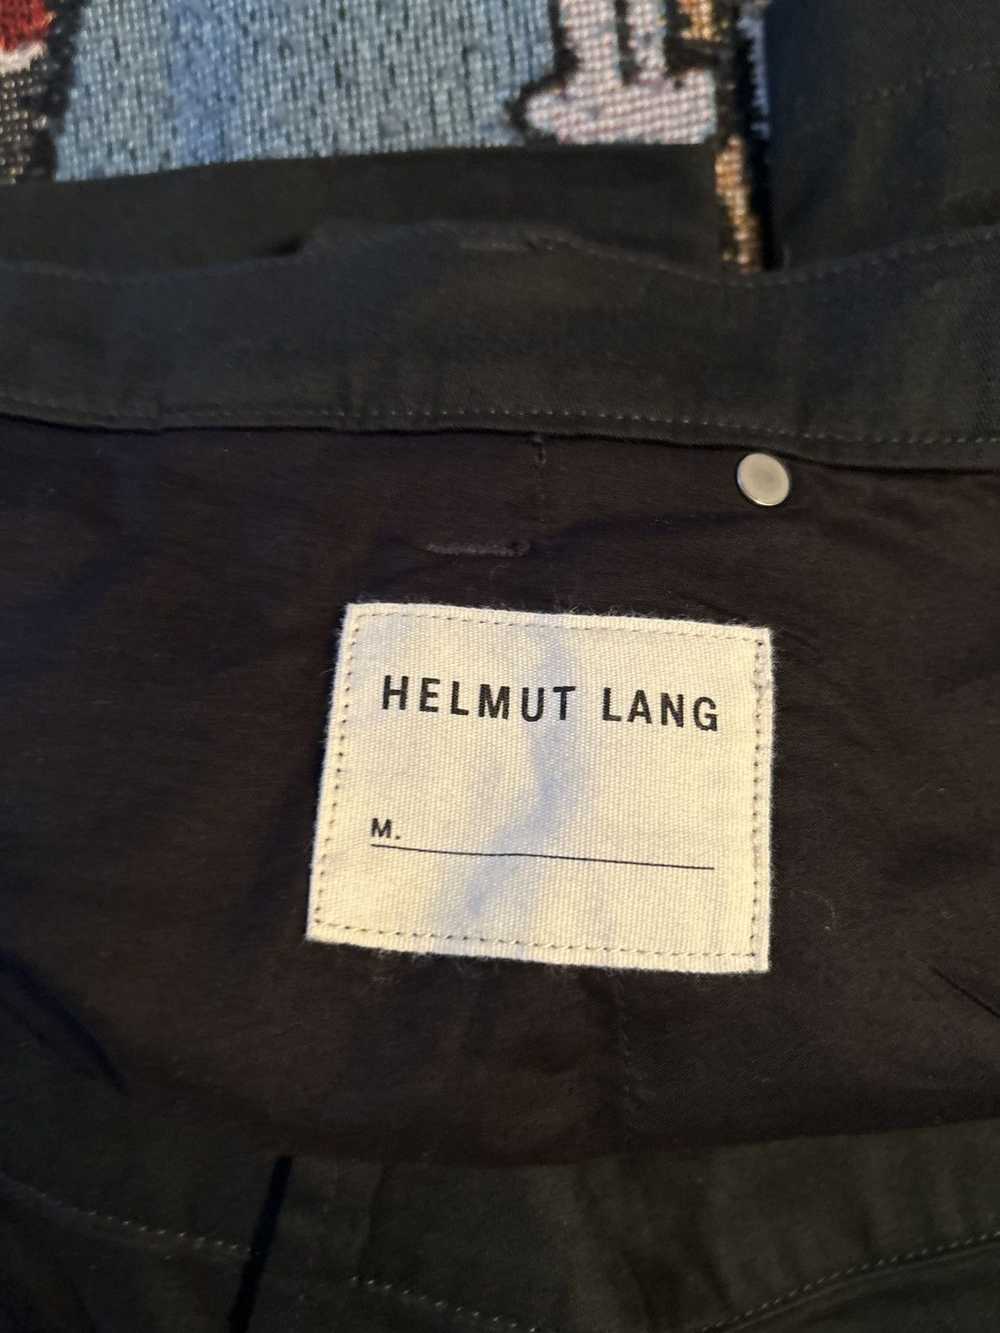 Helmut Lang Helmut Lang Suspender Trousers - image 4